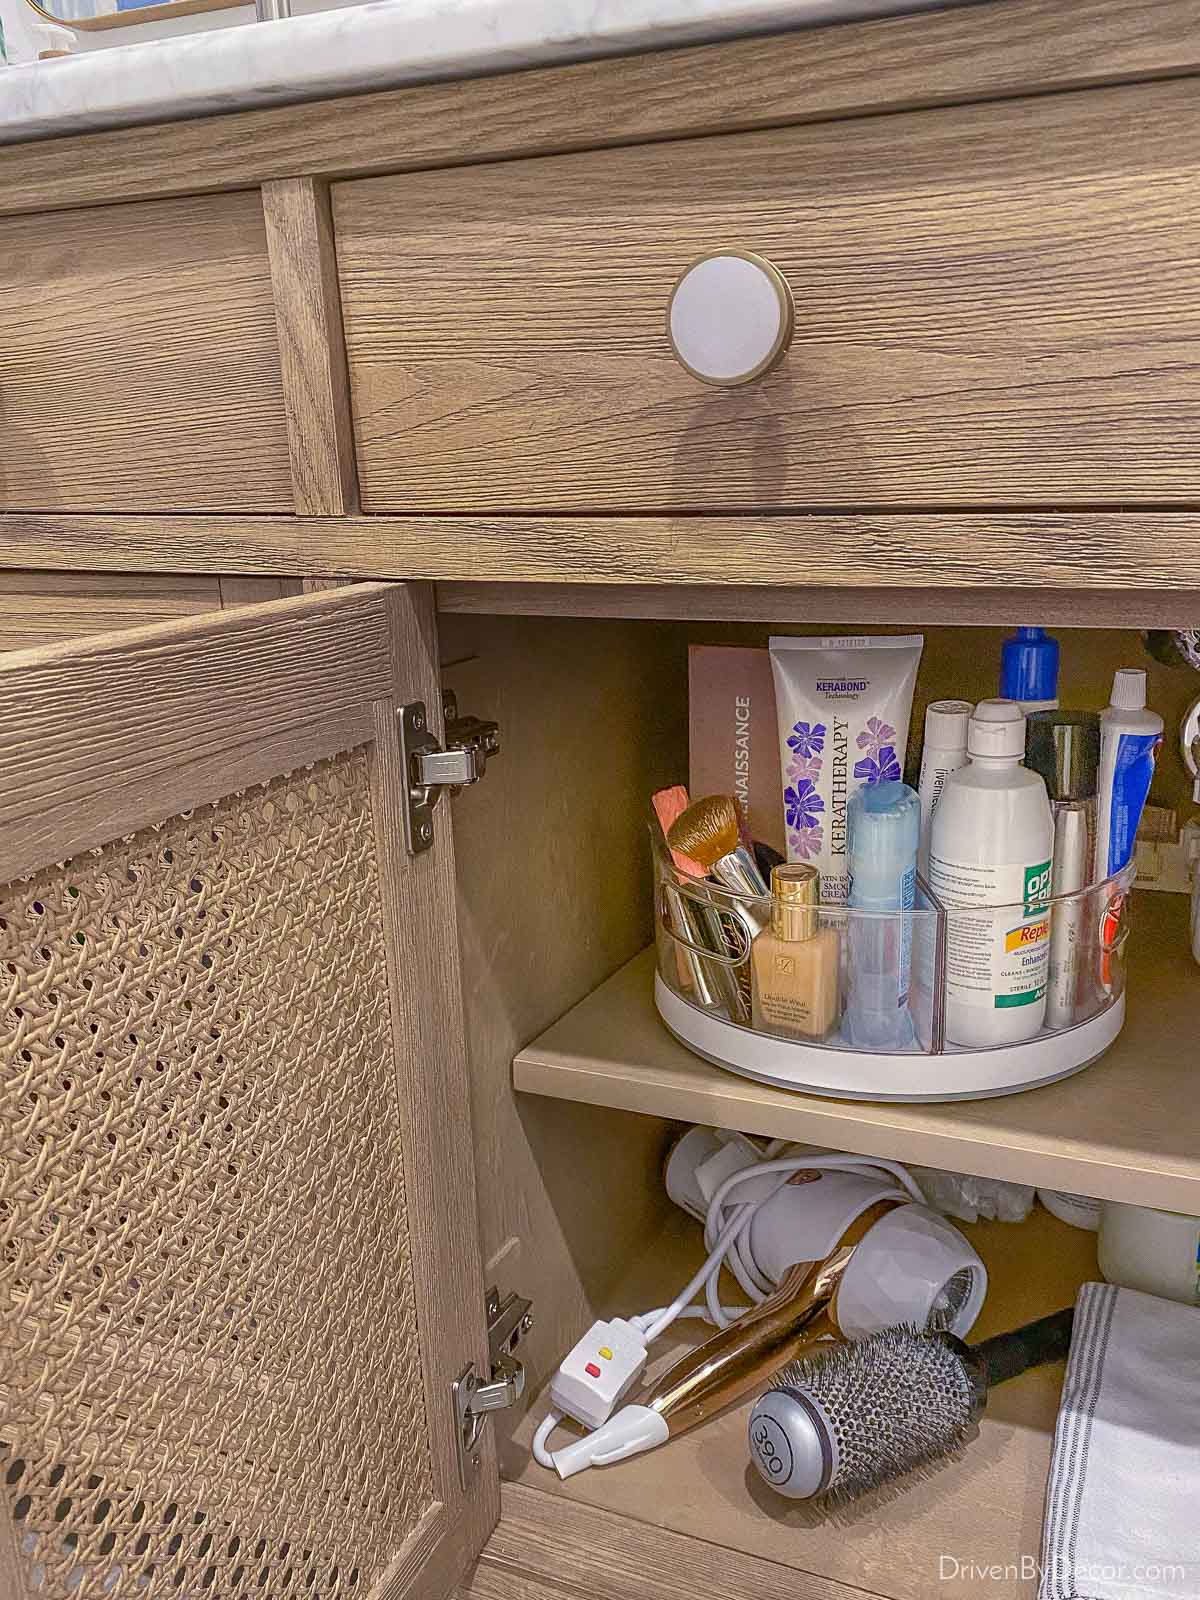 31 Bathroom Storage Ideas to Help You Organize the Loo